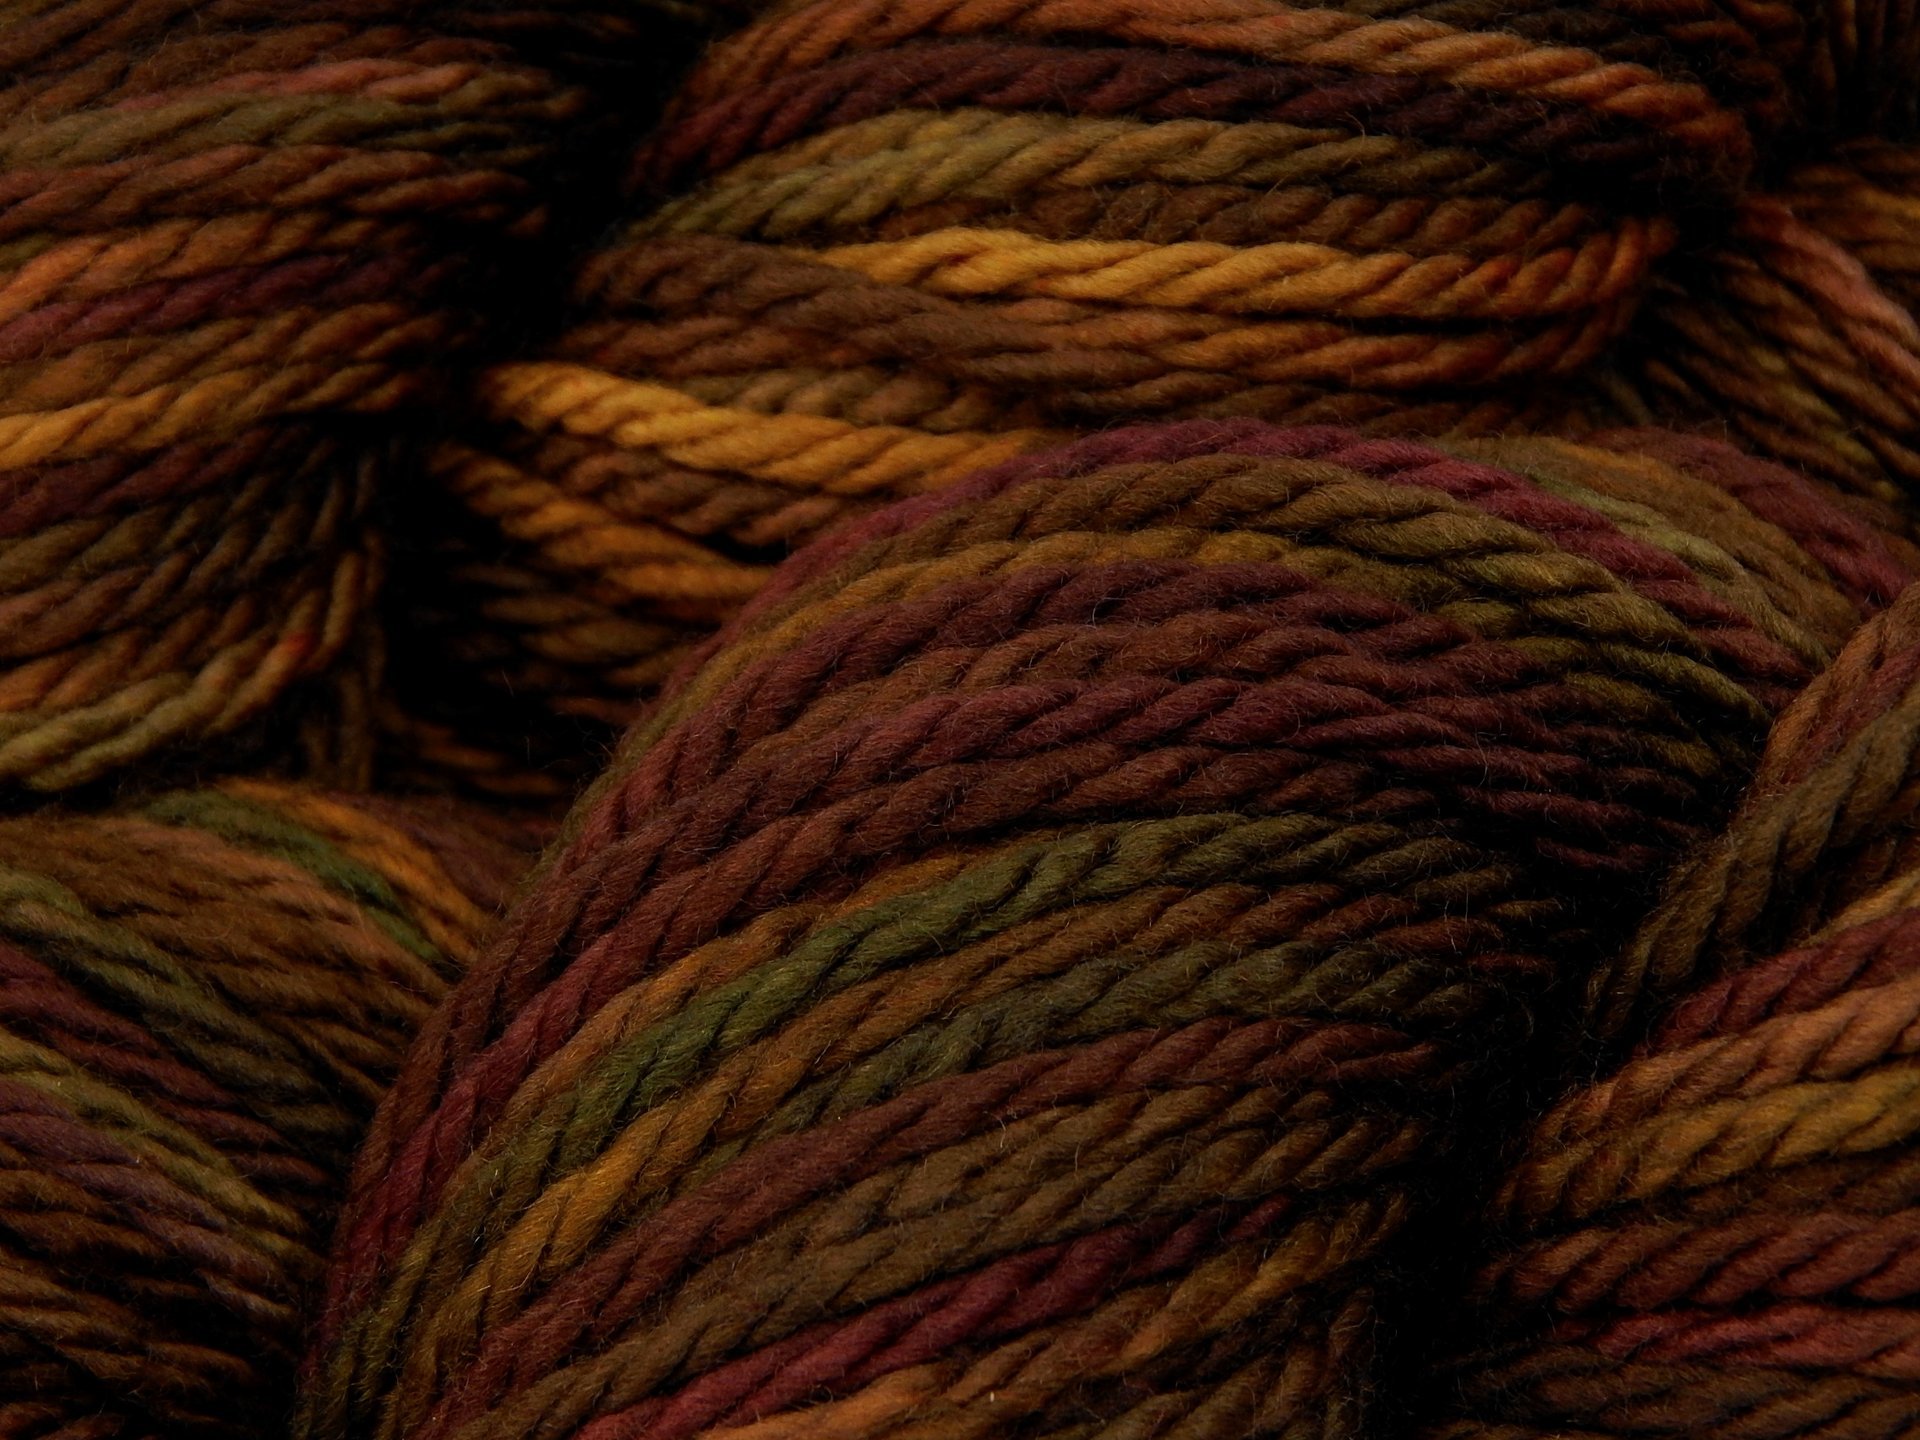 Hand Dyed Yarn, Bulky Weight 100% Superwash Merino Wool - Clove Multi - Brown Gold Red Green Variegated Chunky Knitting Yarn